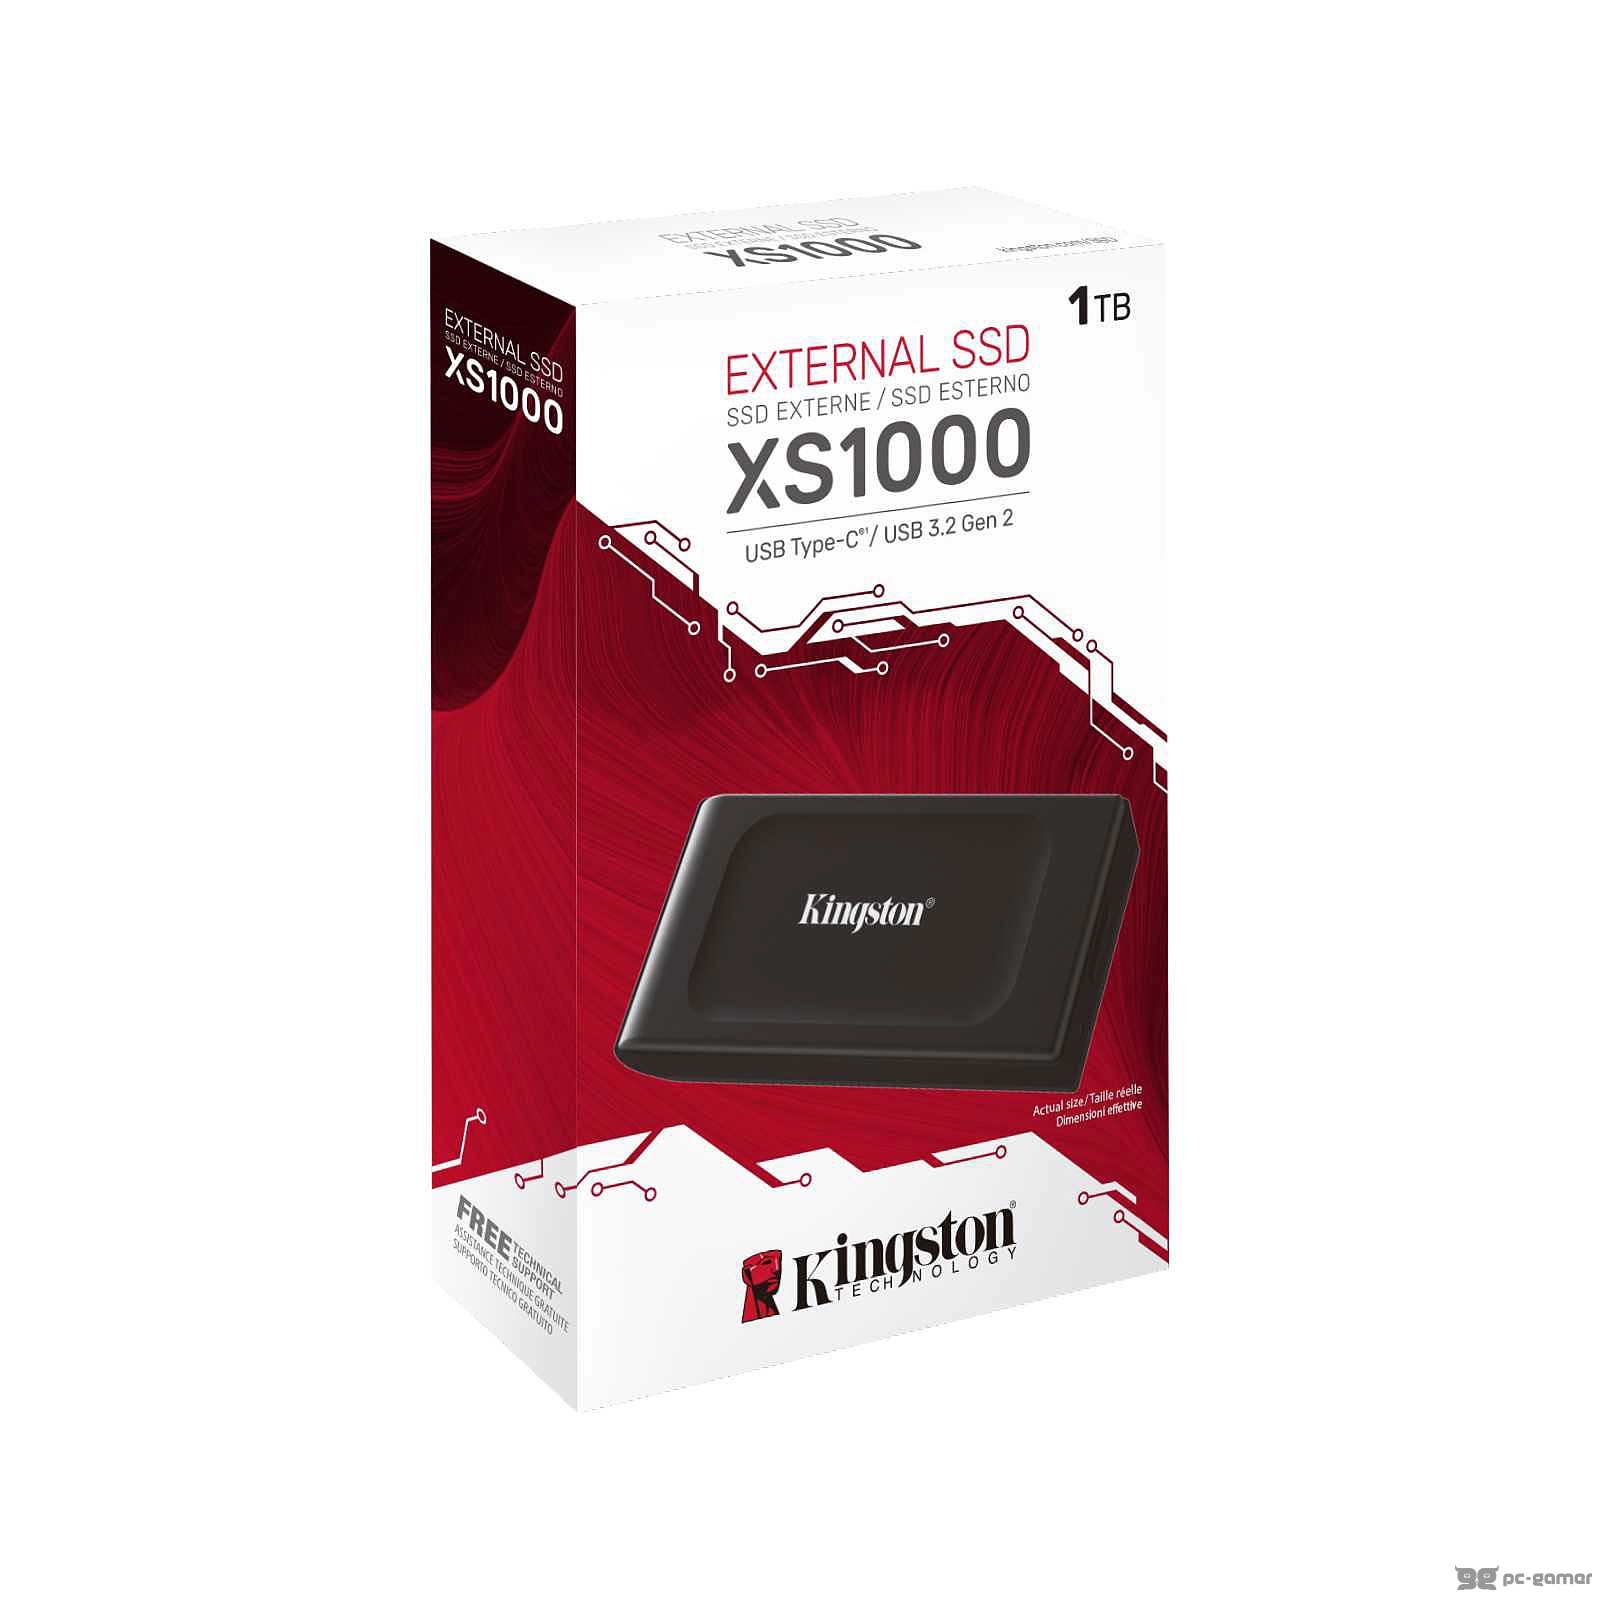 KINGSTON XS1000 2TB Portable External SSD, USB 3.2 Gen 2, Up to 1050MB/s read, 1000MB/s write